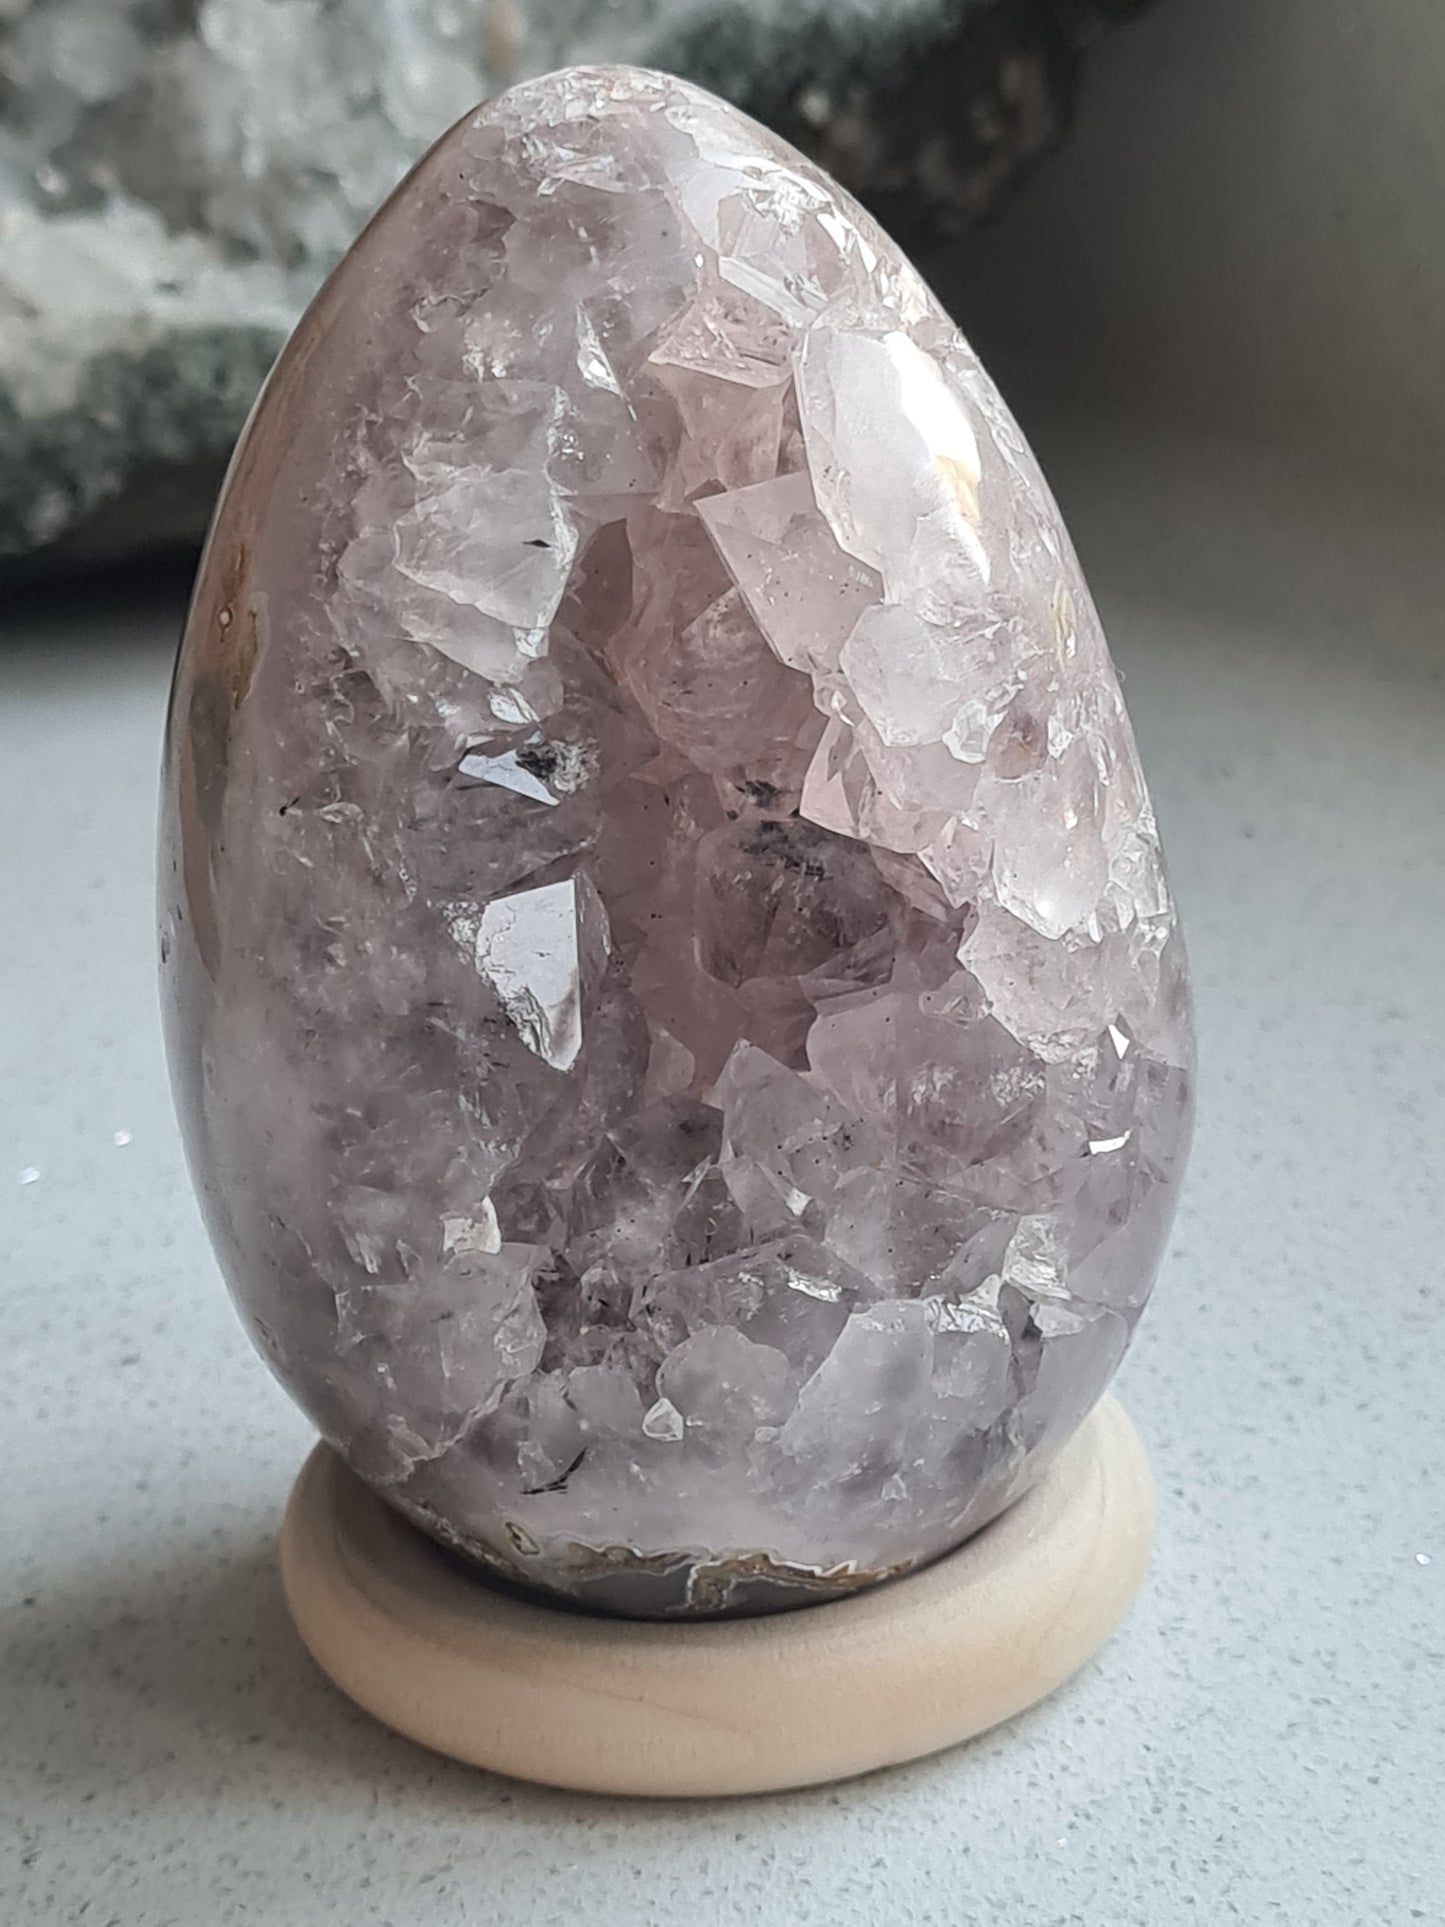 Polished quartz and amethyst cluster egg with subtle smoky quartz colour. Reference AR